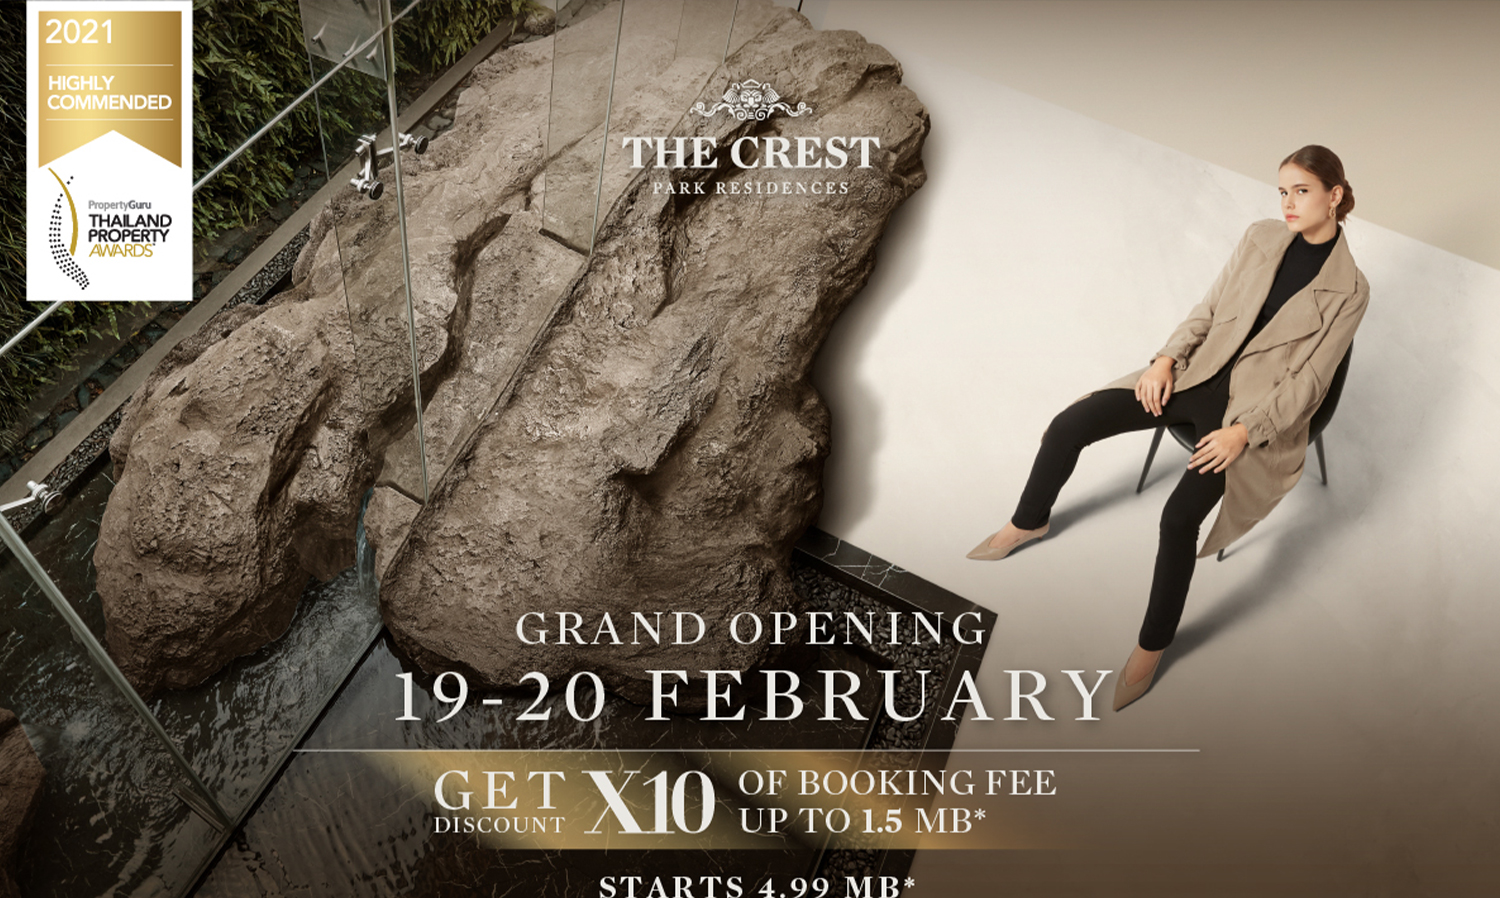 The Crest Park Residences เปิดรอบ Grand opening 19-20 กุมภาพันธ์ เลือกห้องวิวสวยเริ่ม 4.99 ล้าน